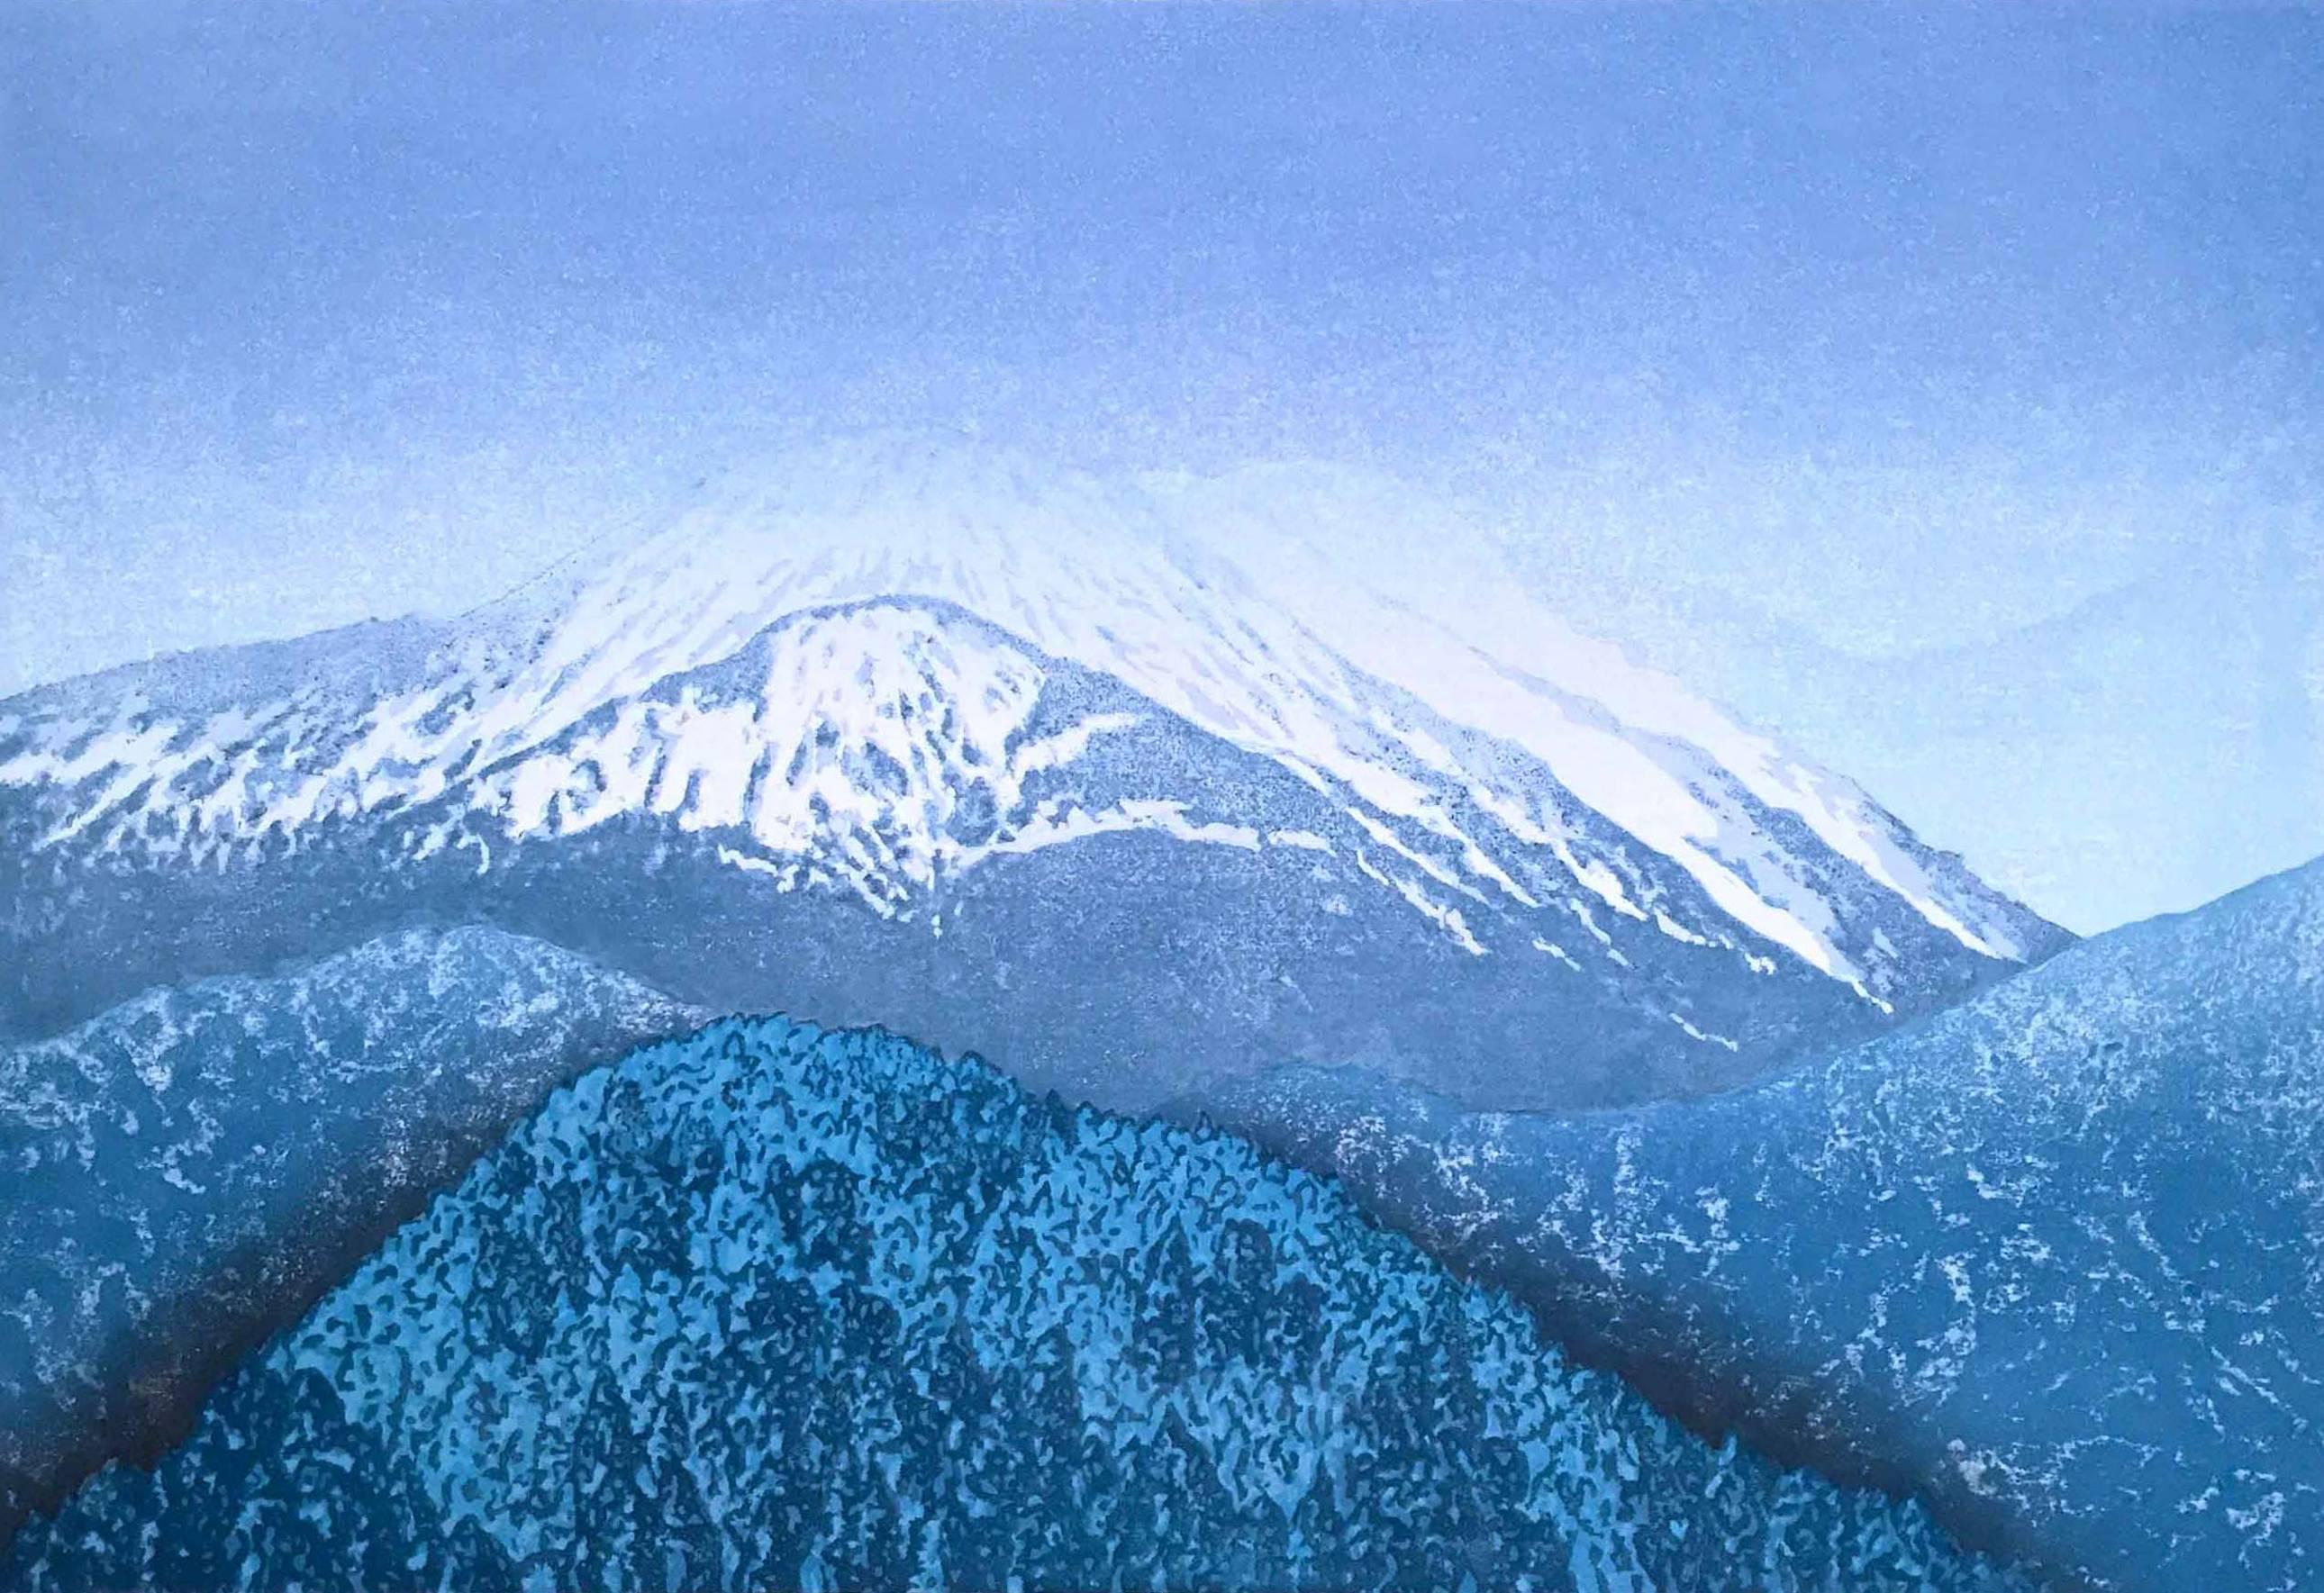 Blue, Ukiyo-e landscape woodcut print, 2014